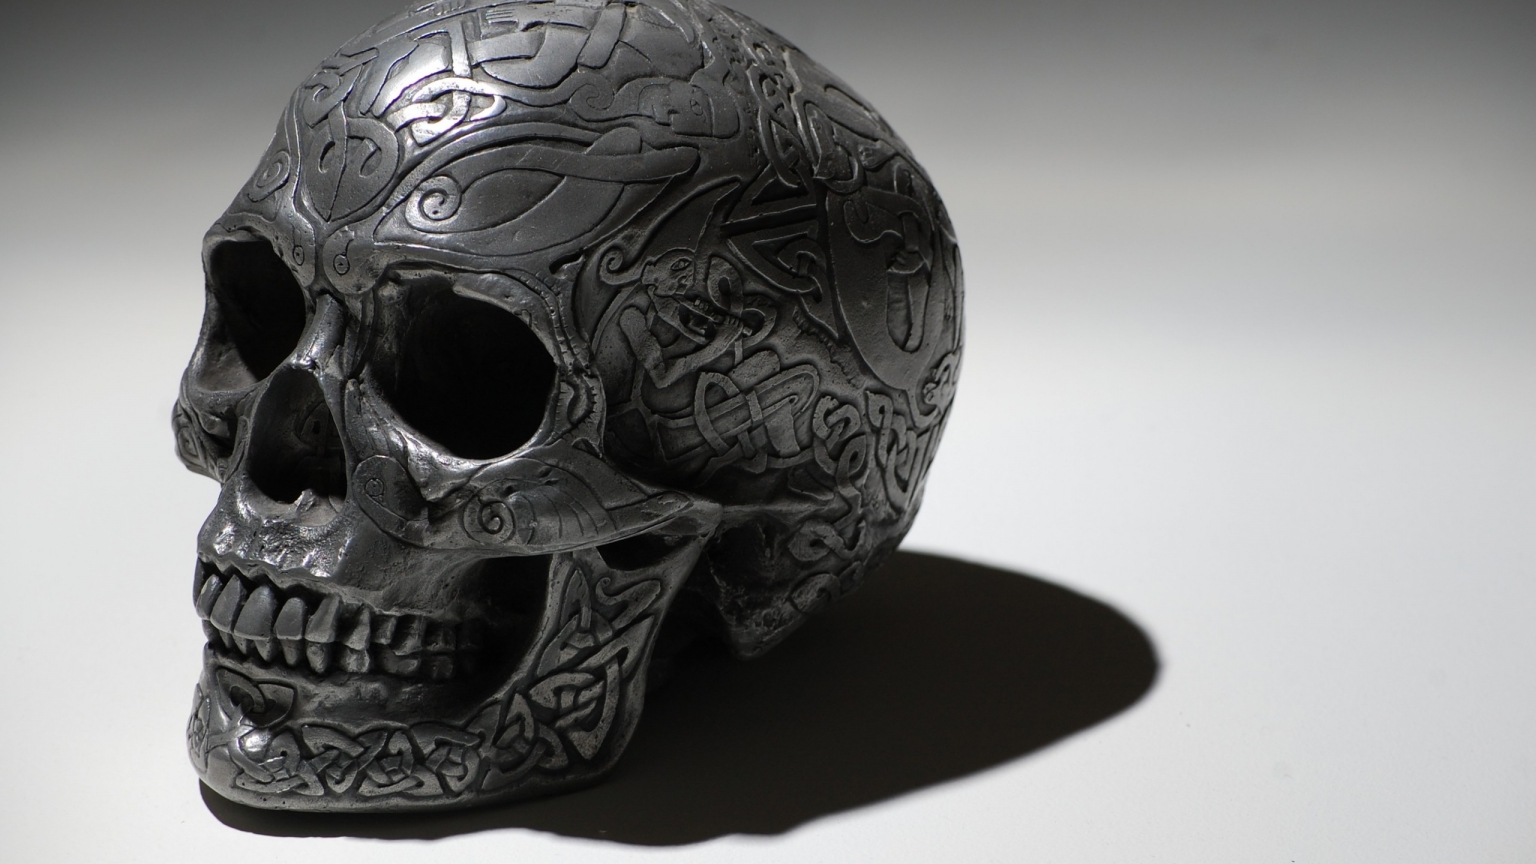 Metal Skull for 1536 x 864 HDTV resolution